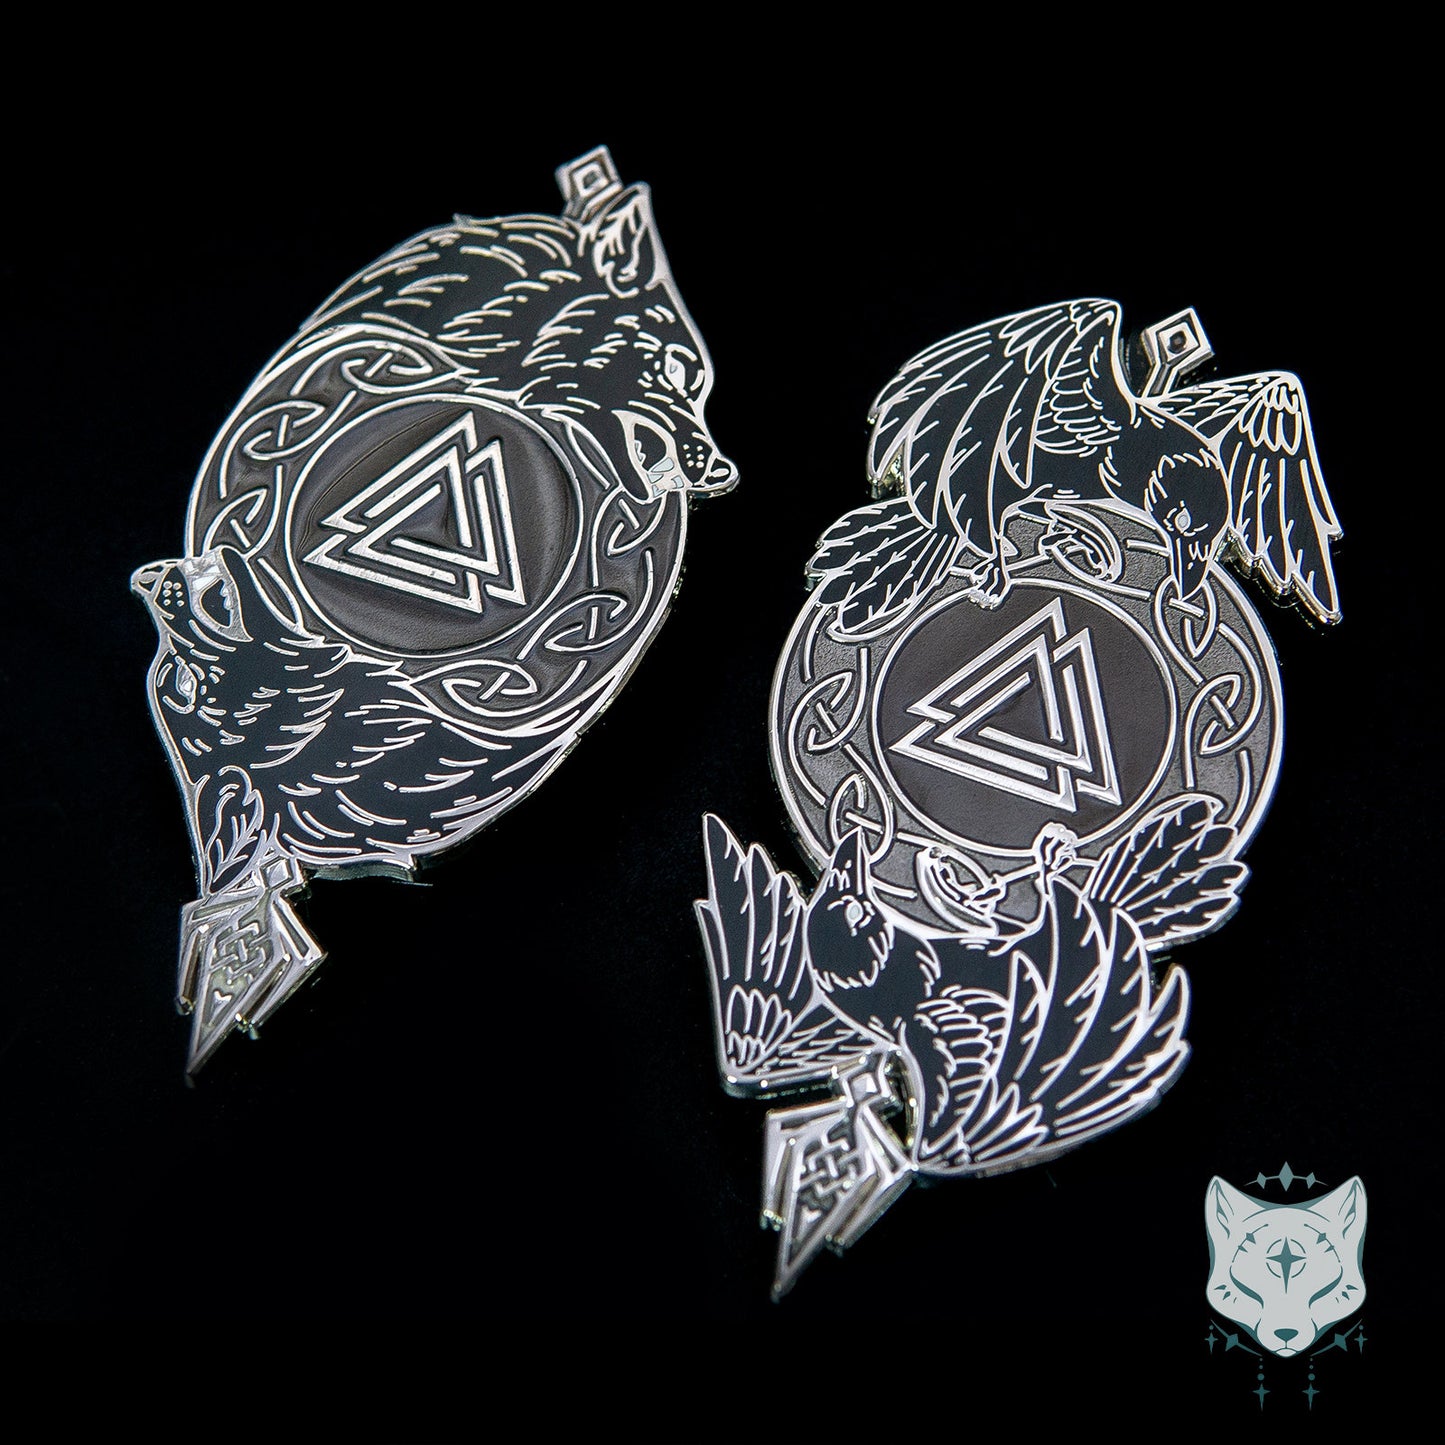 Odin's Wolves Enamel Pin - RETIRING Silver Variant - only 100 made - 3.3" / 84mm Enamel Pin, Geri and Freki, Norse Mythology